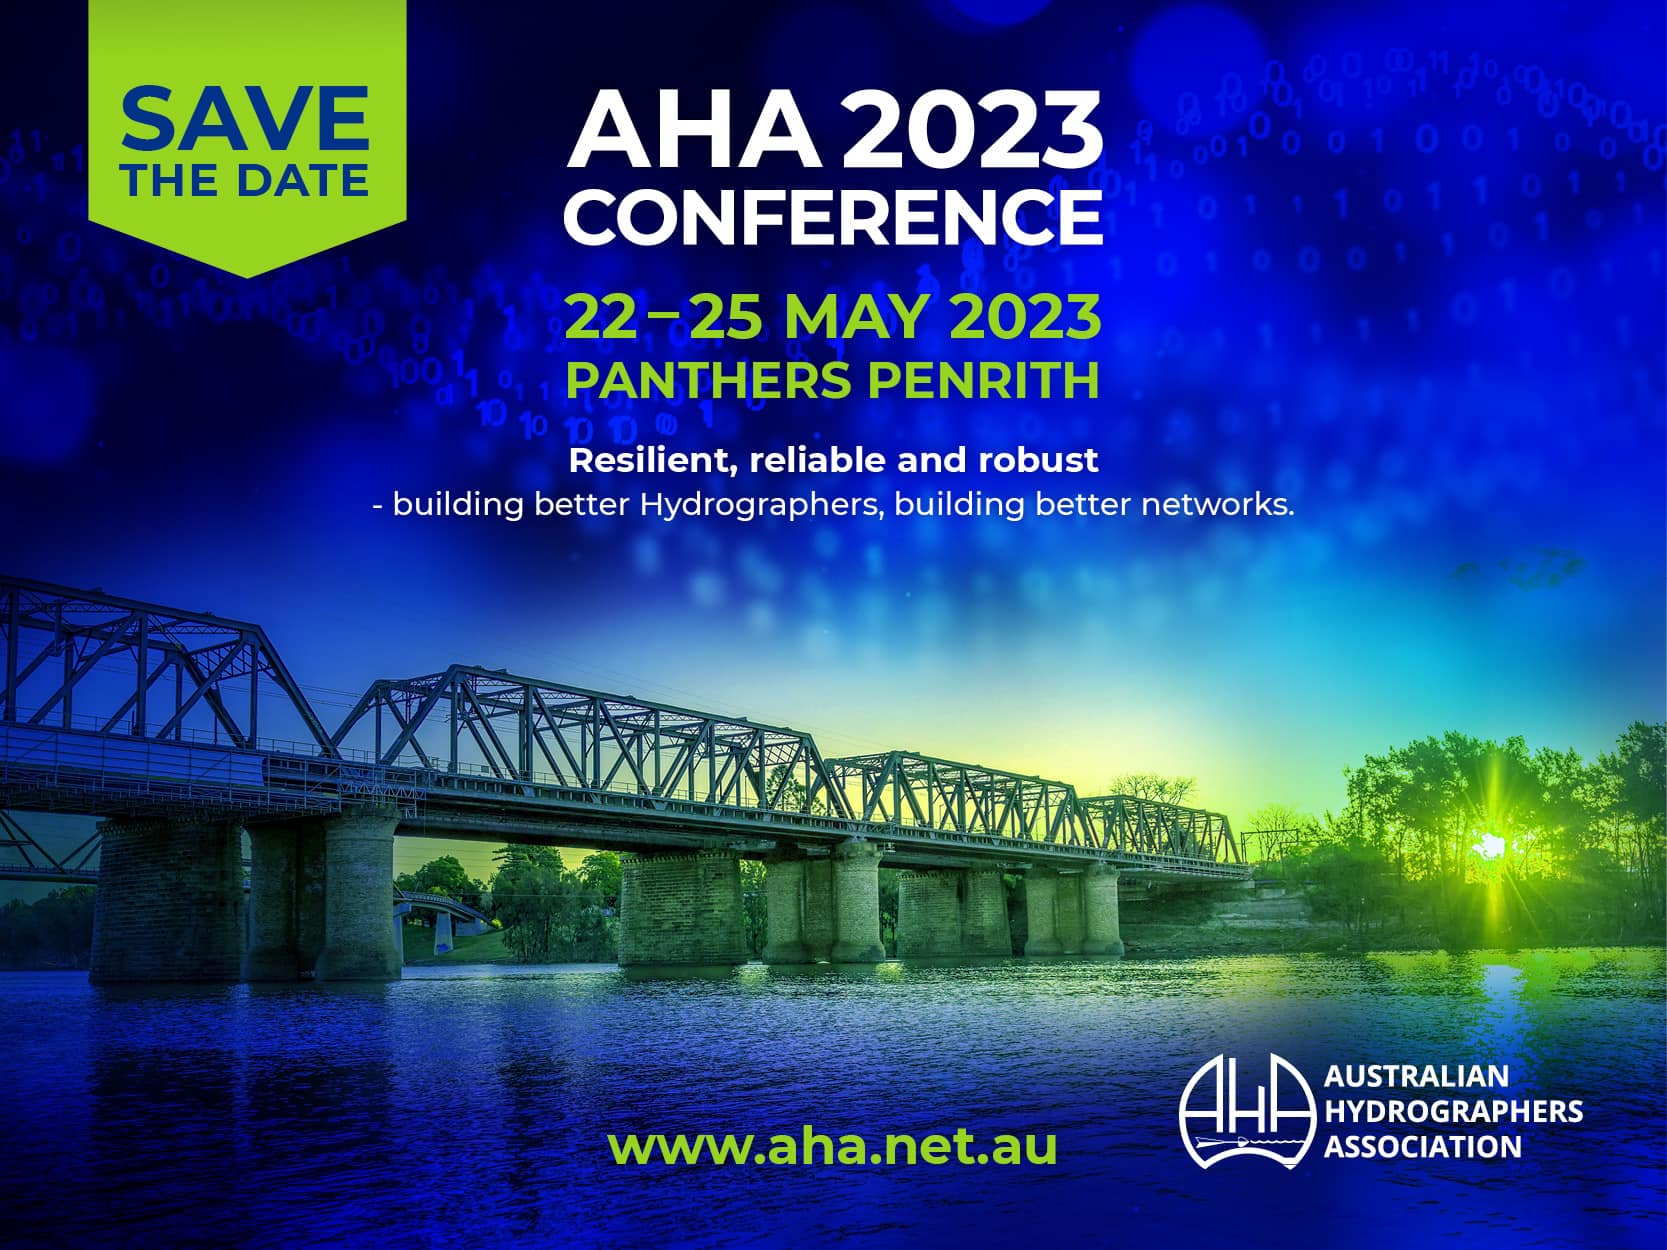 AHA 2023 CONFERENCE Australian Hydrographers Association